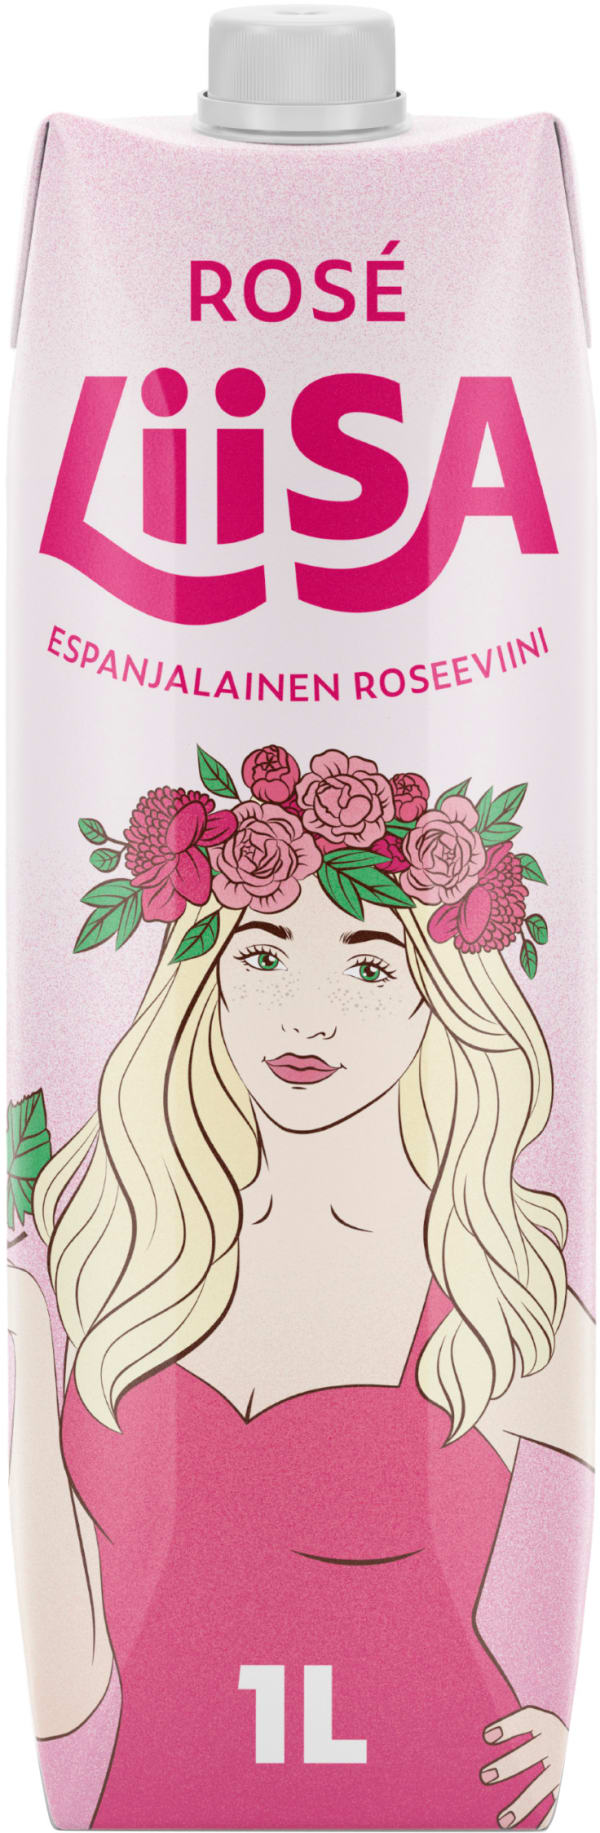 Liisa Bobal Rosé 2021 kartonkitölkki